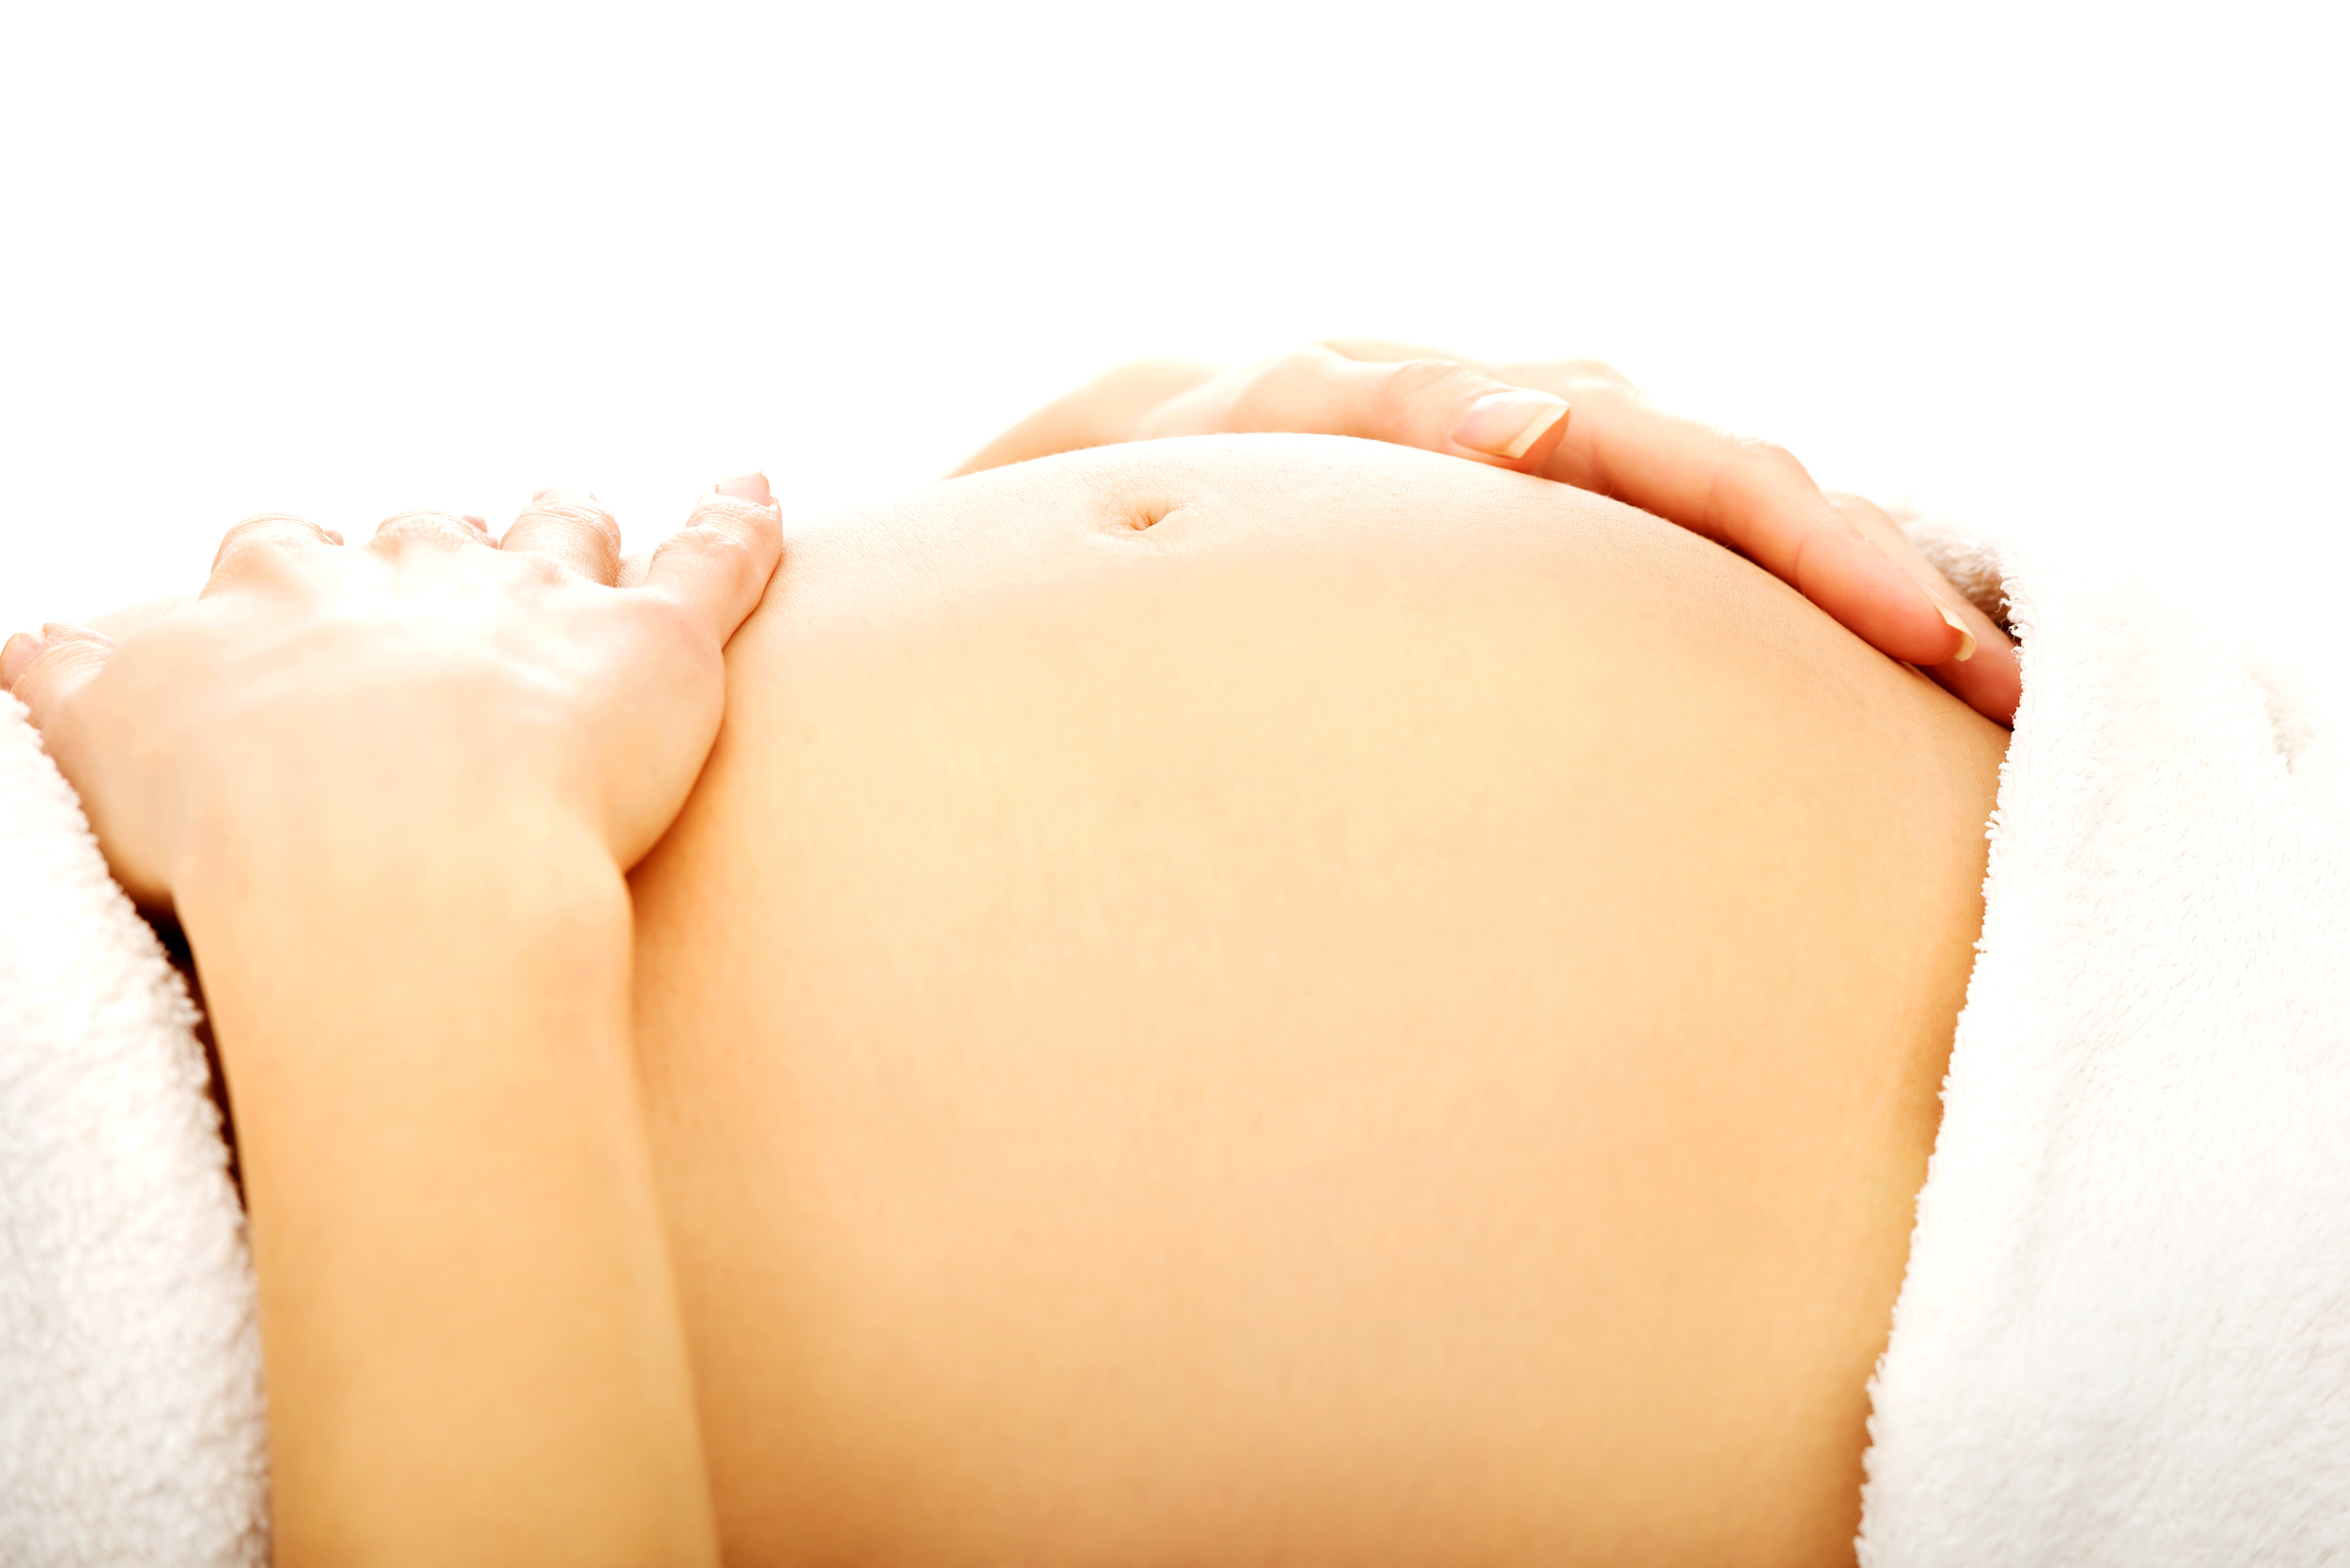 Pregnant woman massagin her belly